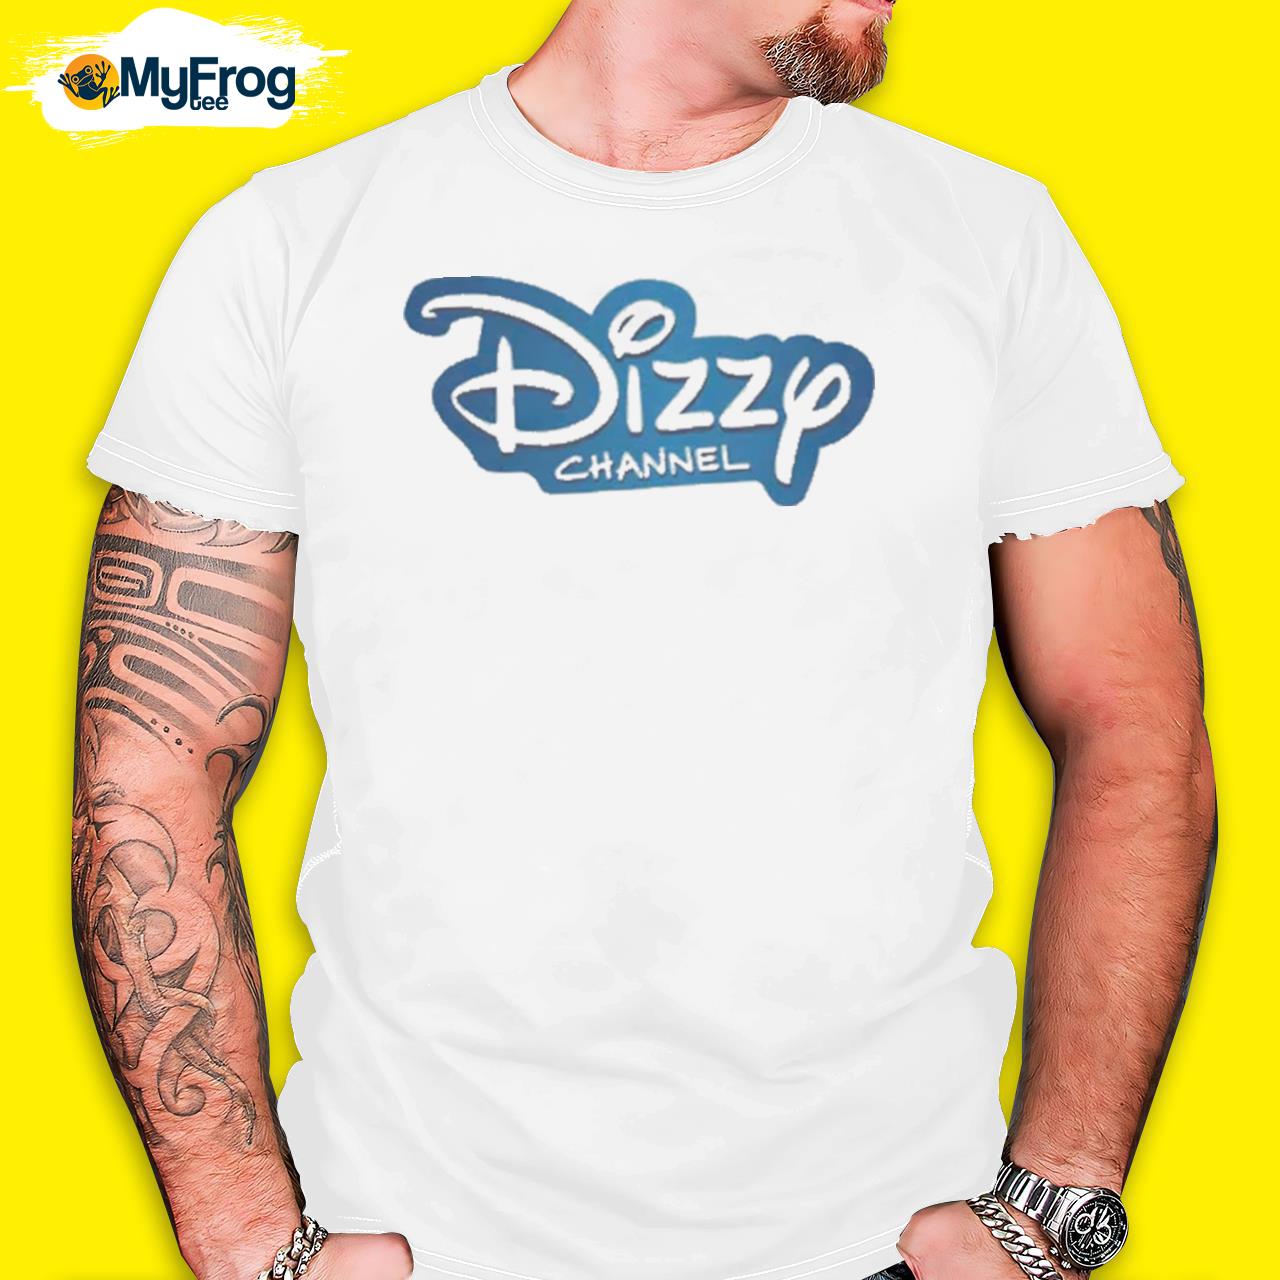 Dizzy channel shirt